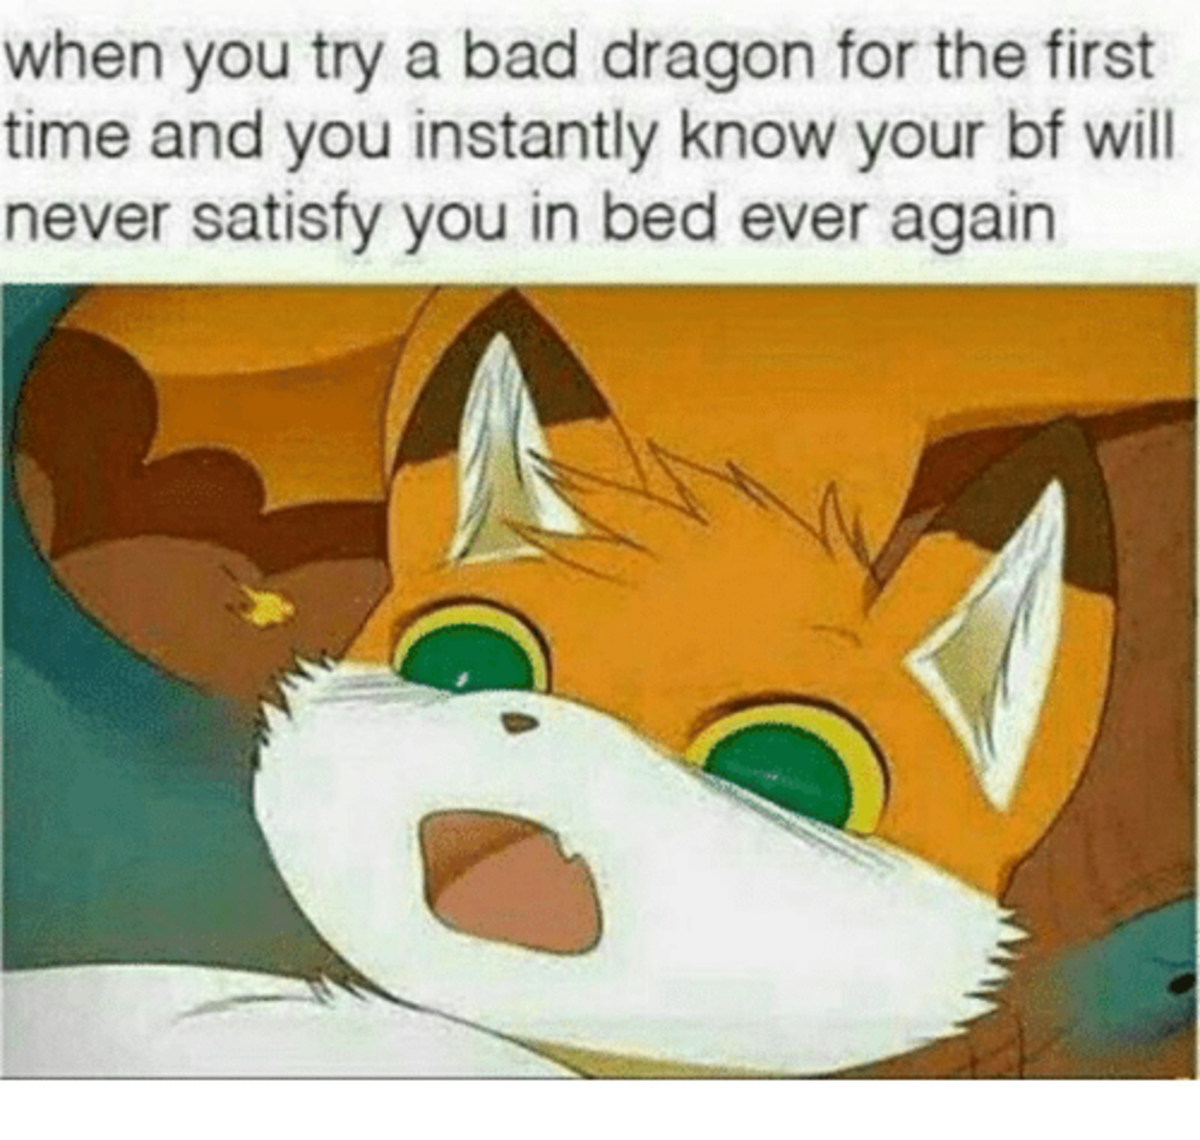 First bad dragon